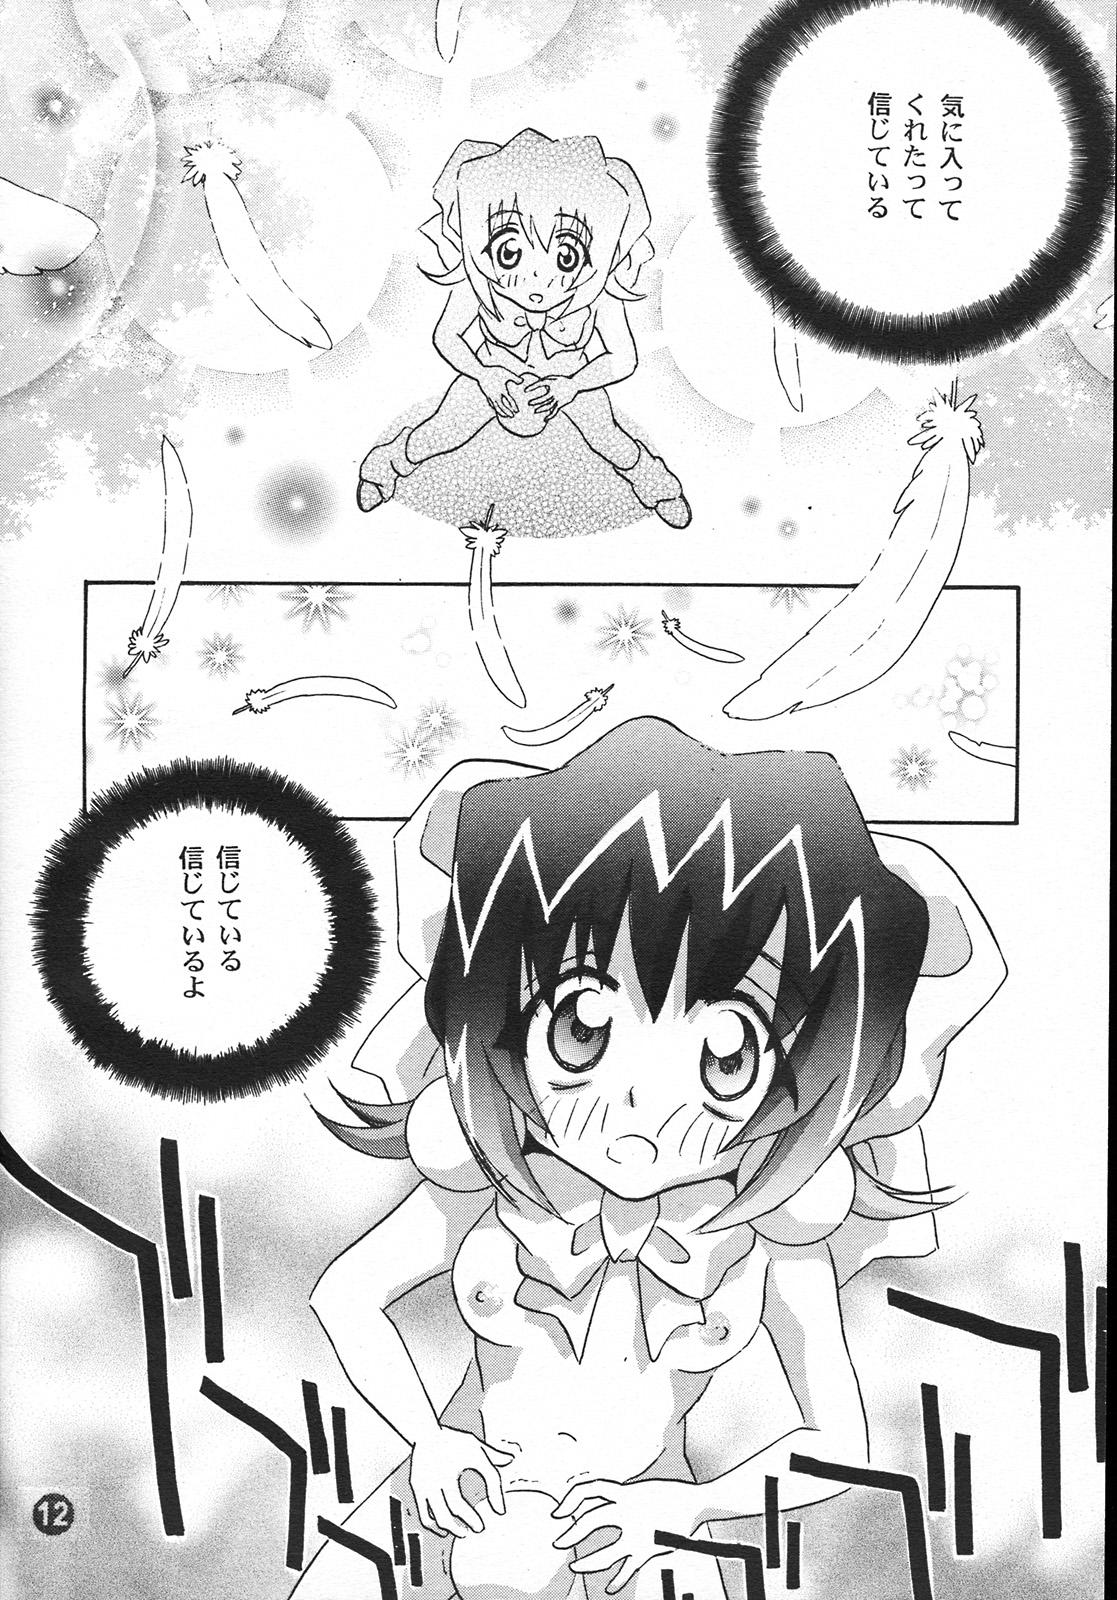 Sucking PATA PATA PATAPi ! - Akihabara dennou gumi Funny - Page 11